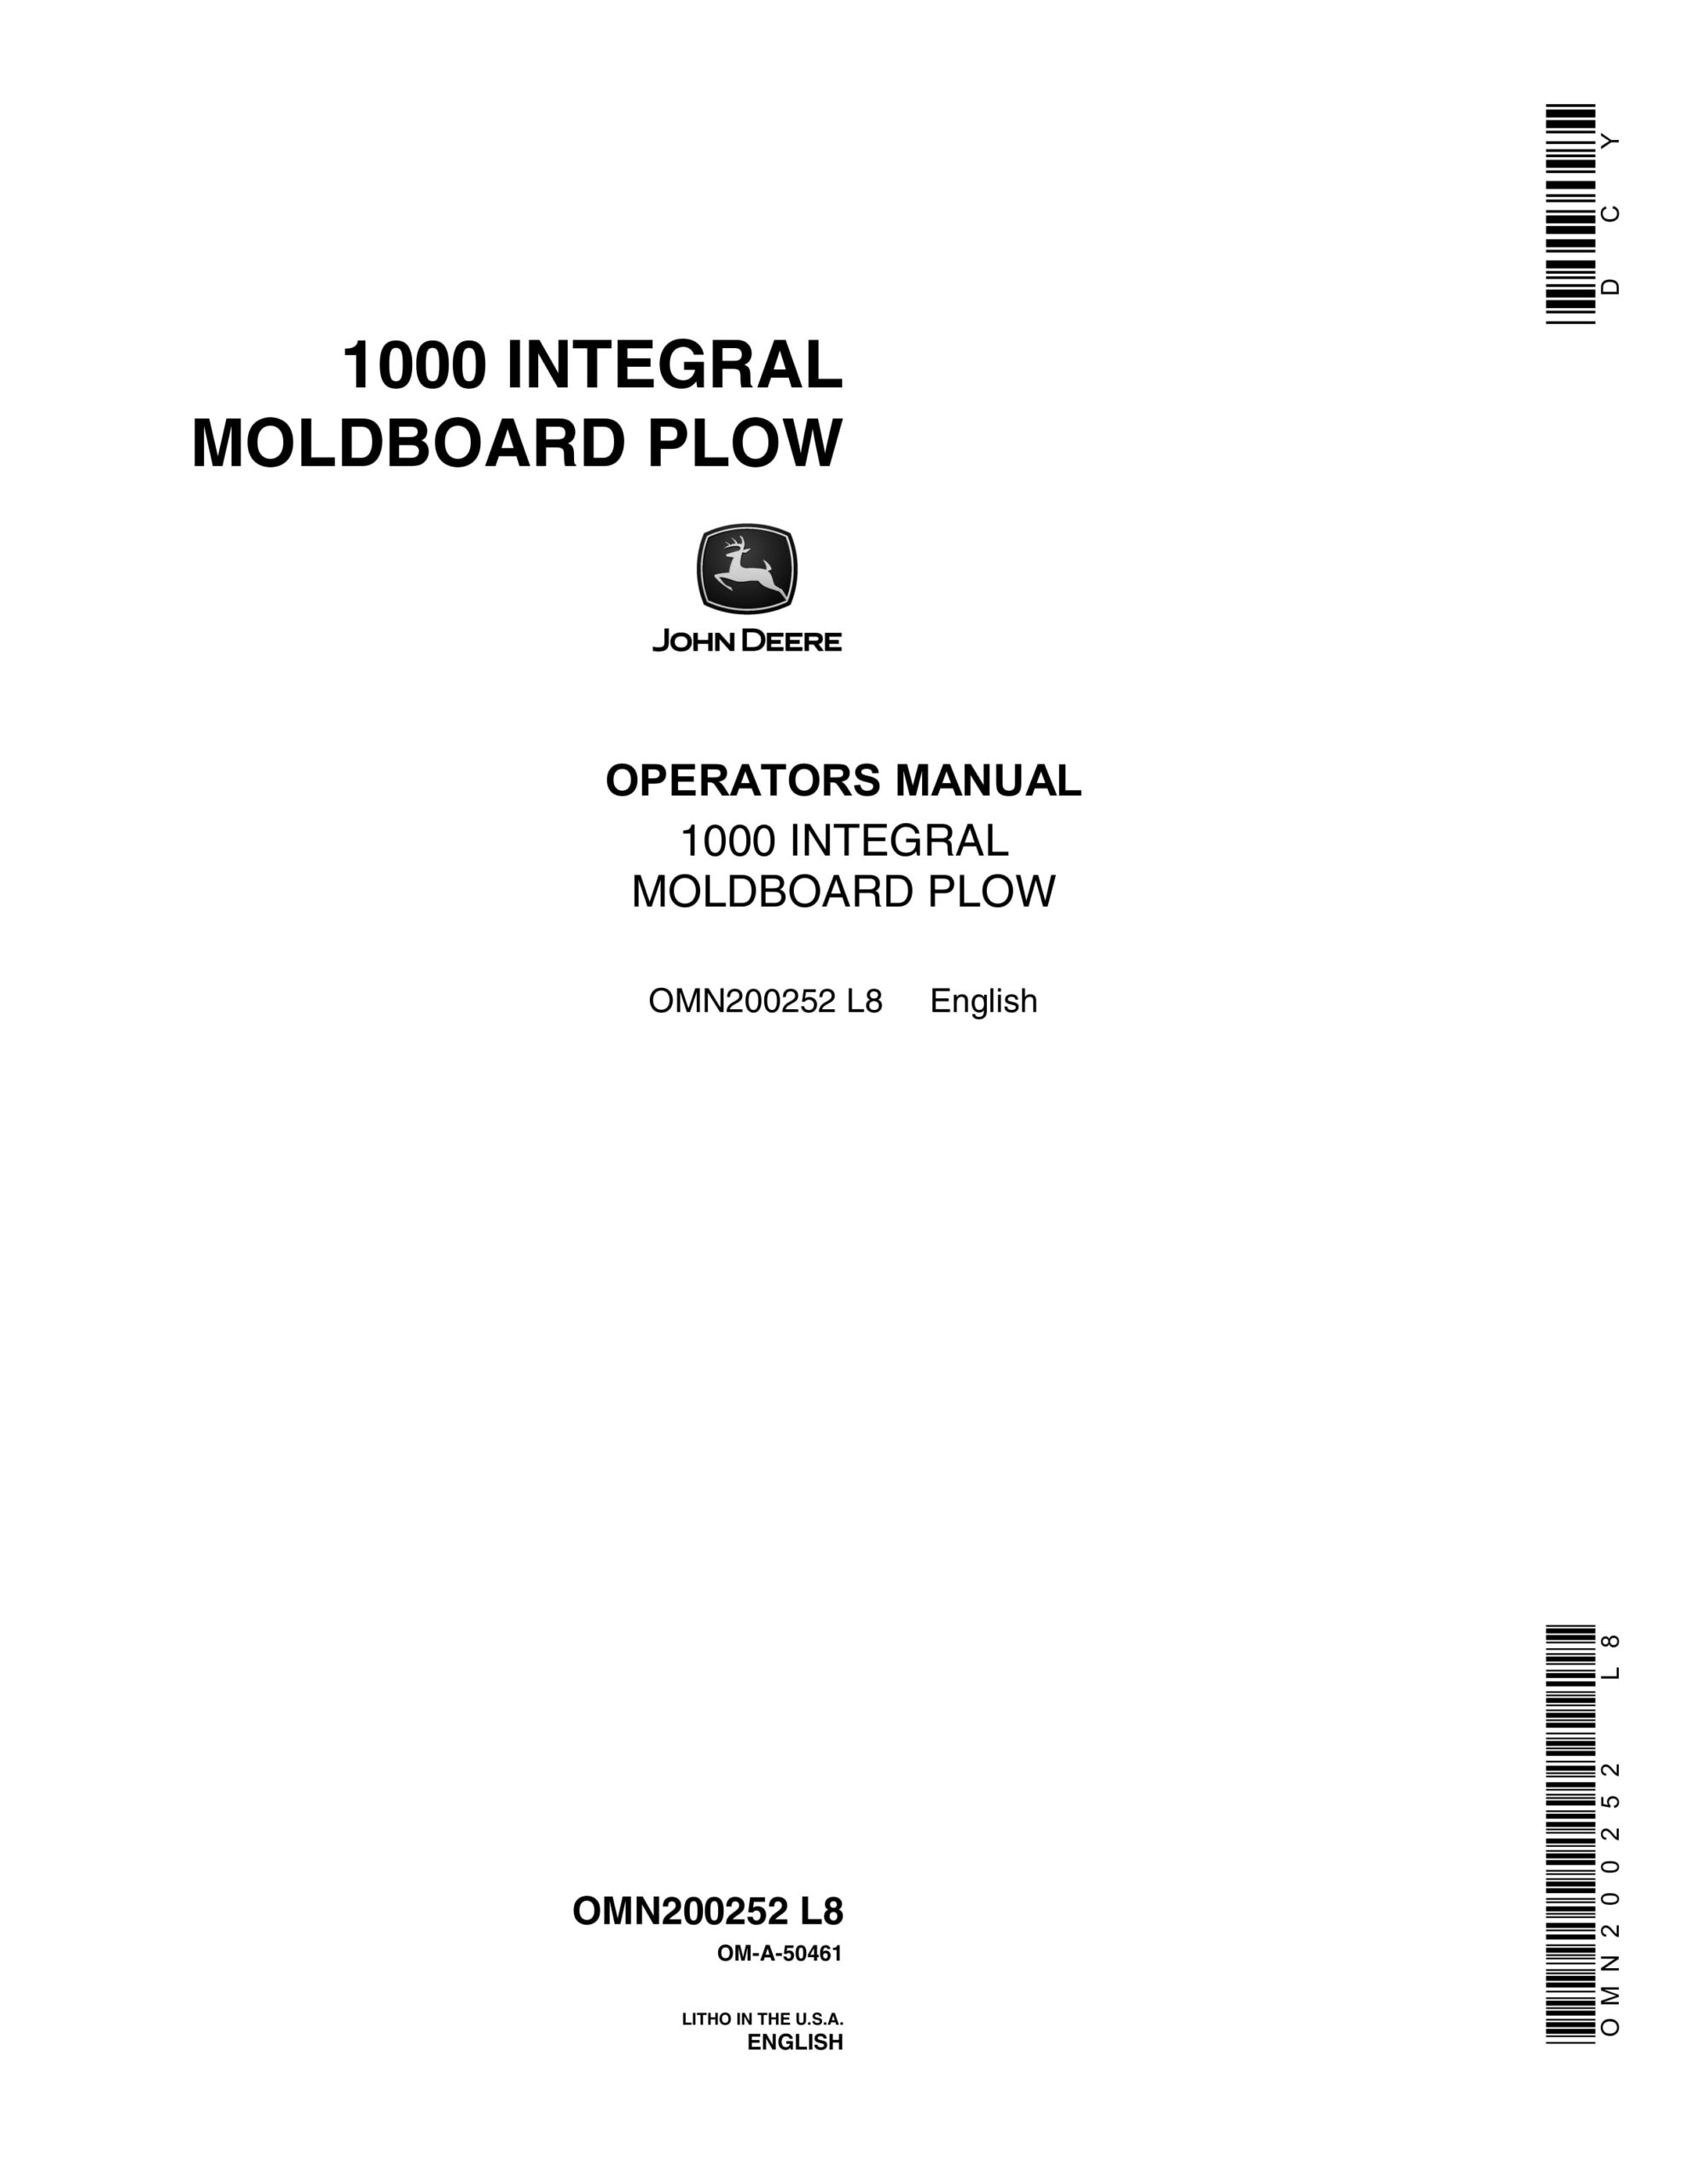 John Deere 1000 INTEGRAL MOLDBOARD PLOW Operator Manual OMN200252-1